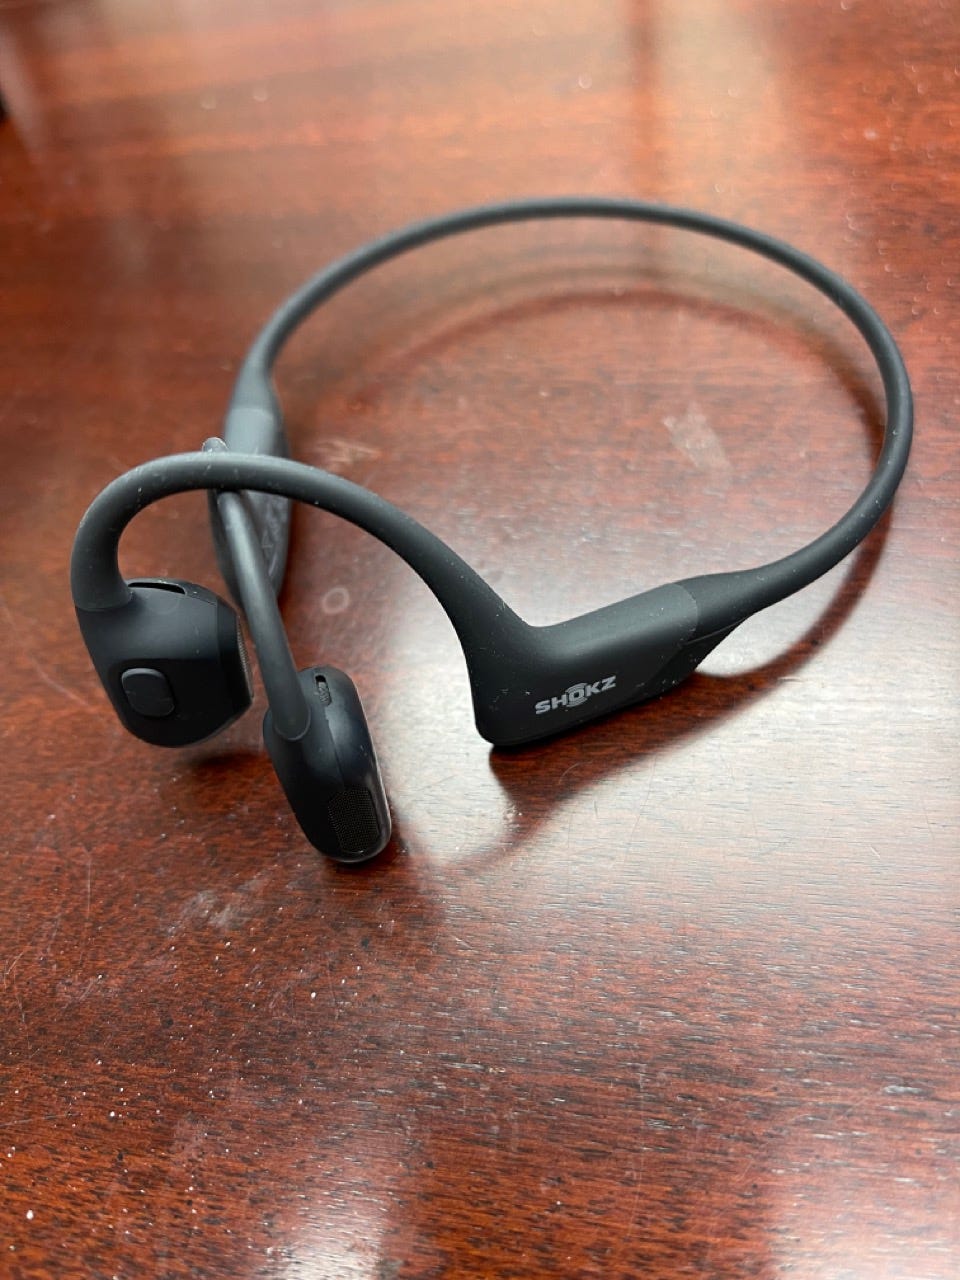 Shokz OPENRUN Wireless Open Ear Bone Conduction Headphones